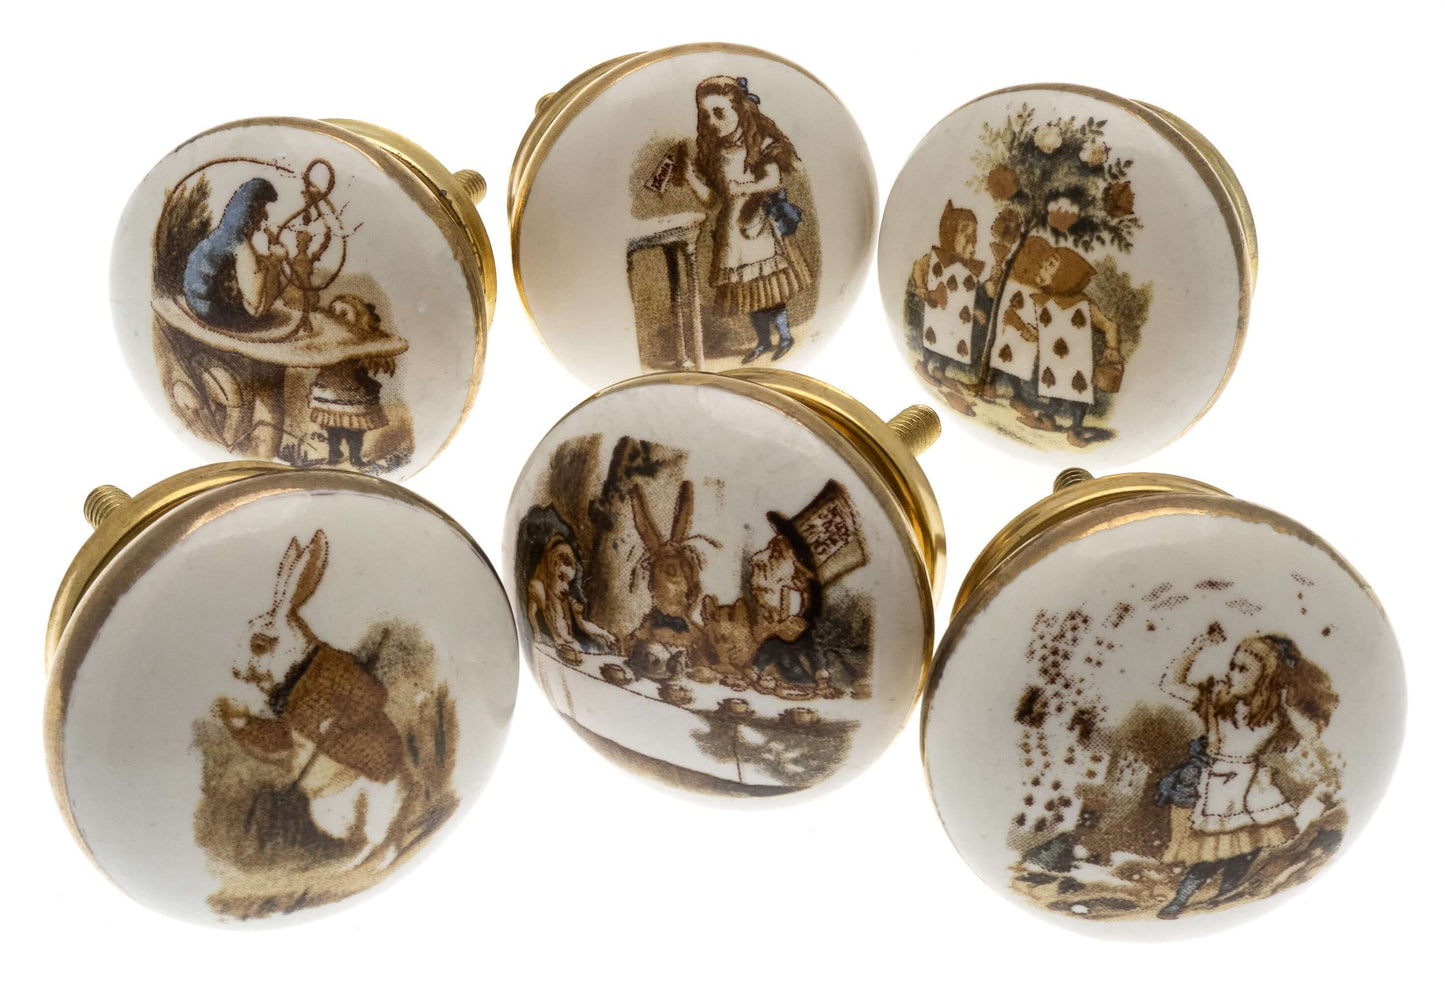 Ceramic Door Knobs Exclusive Alice in Wonderland in Colour with Gold Surround (Set of 6)